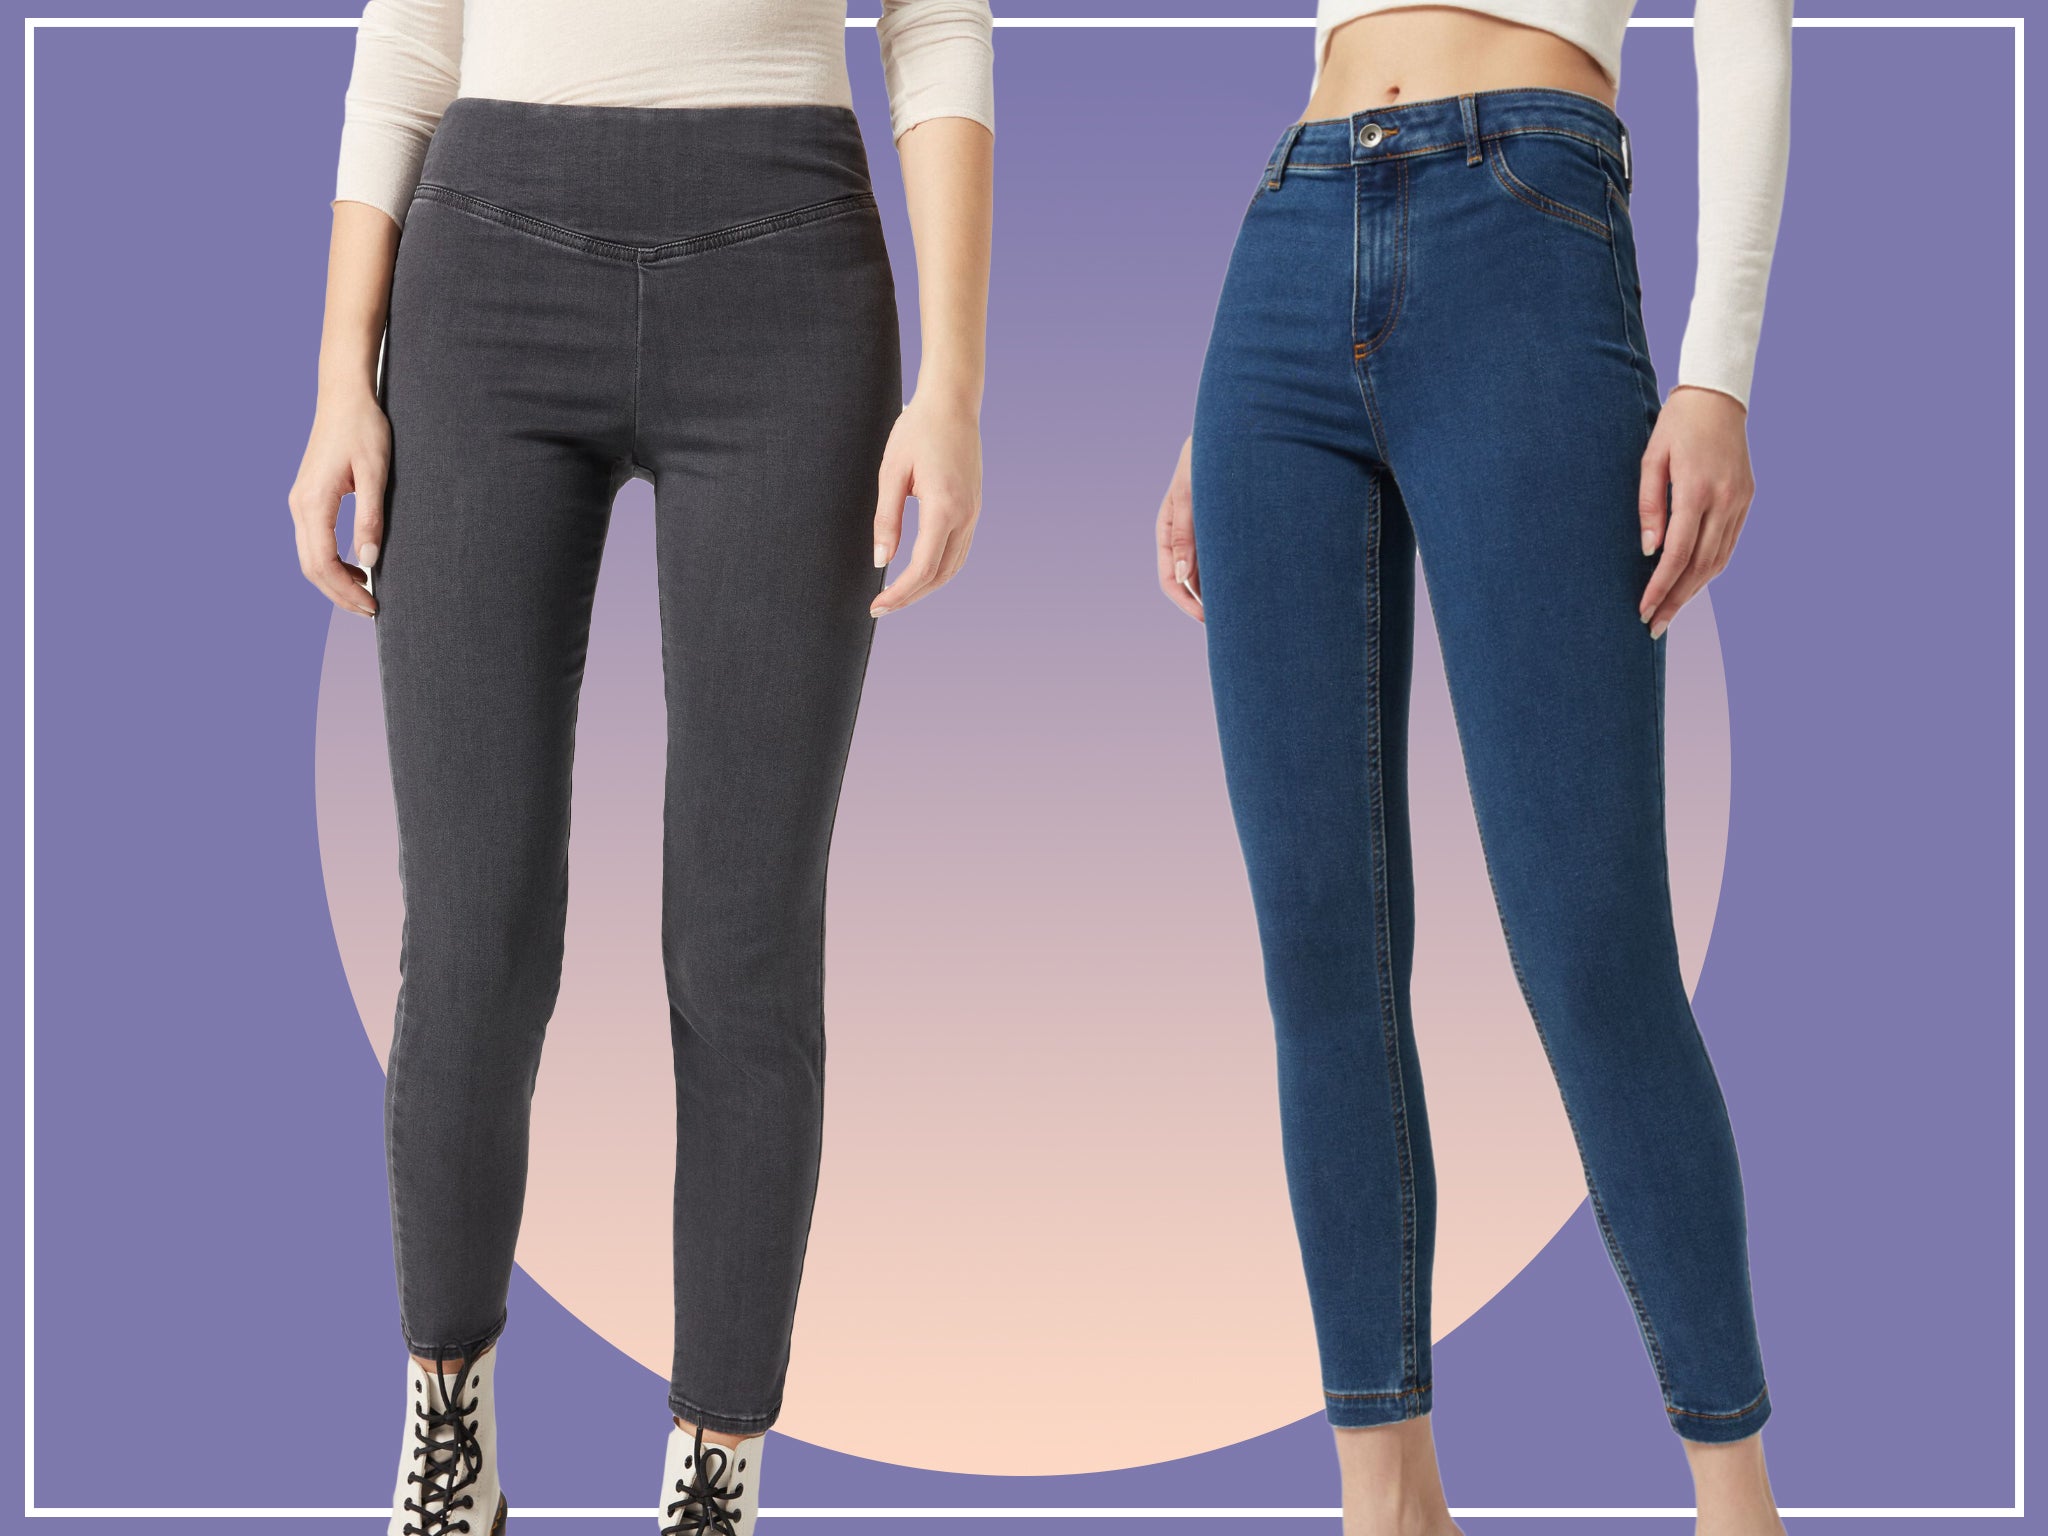 Lady's Fleece Jeans Lined Warm Velvet Thick Pants Leggings Trousers UK STOCK New 